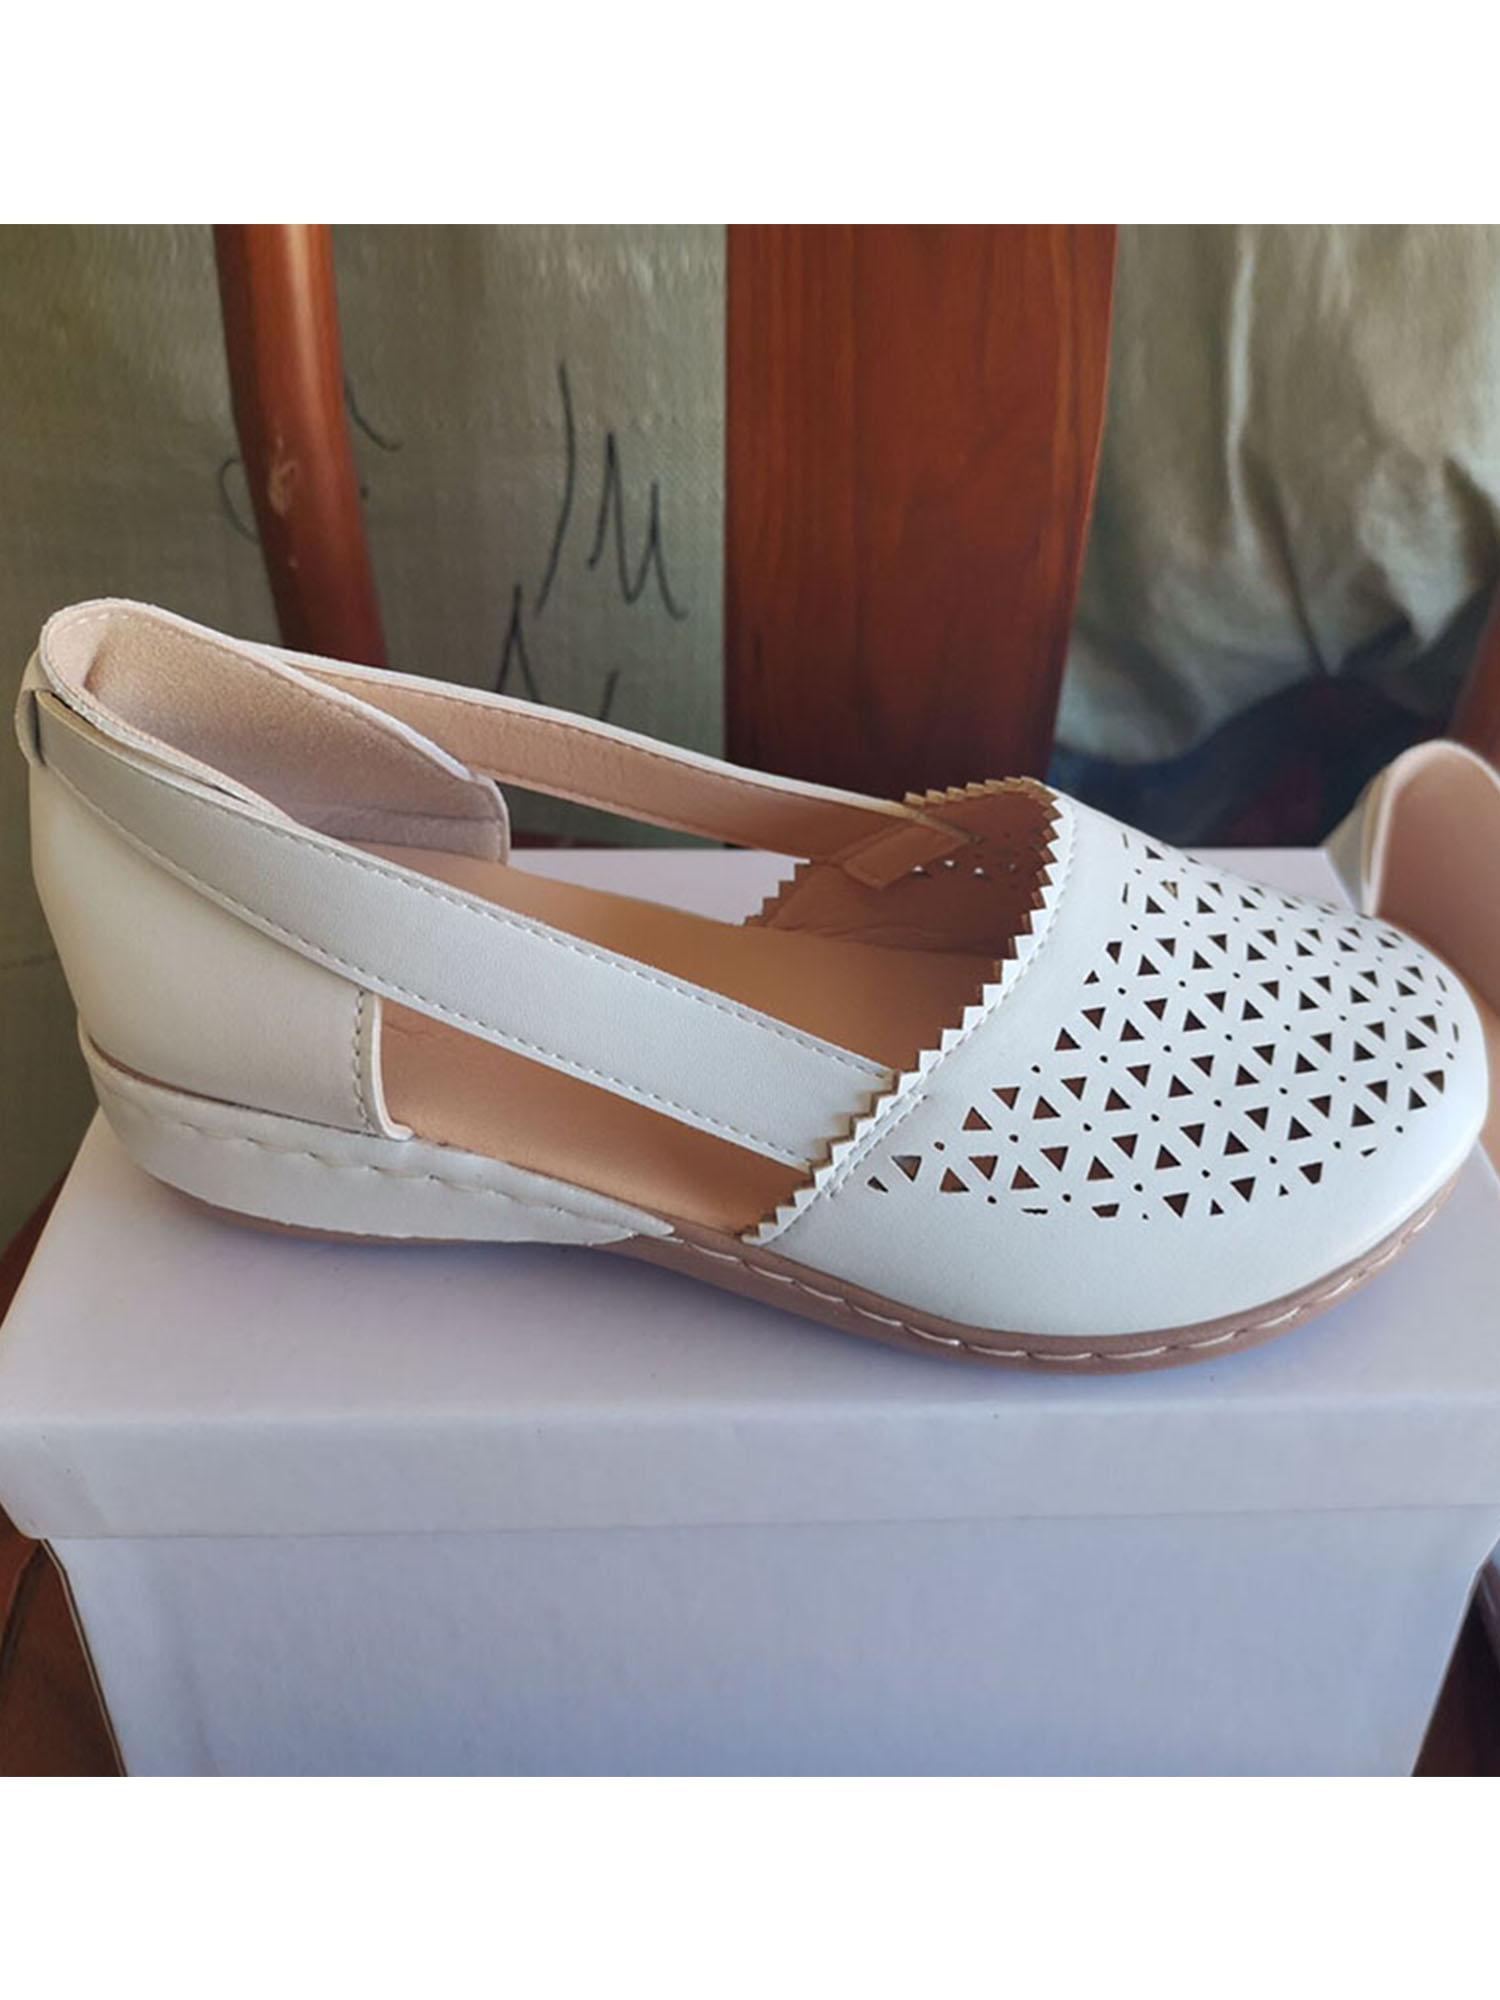 Crocowalk Summer Sandals for Women Comfortable Hollow Beathable Walking ...